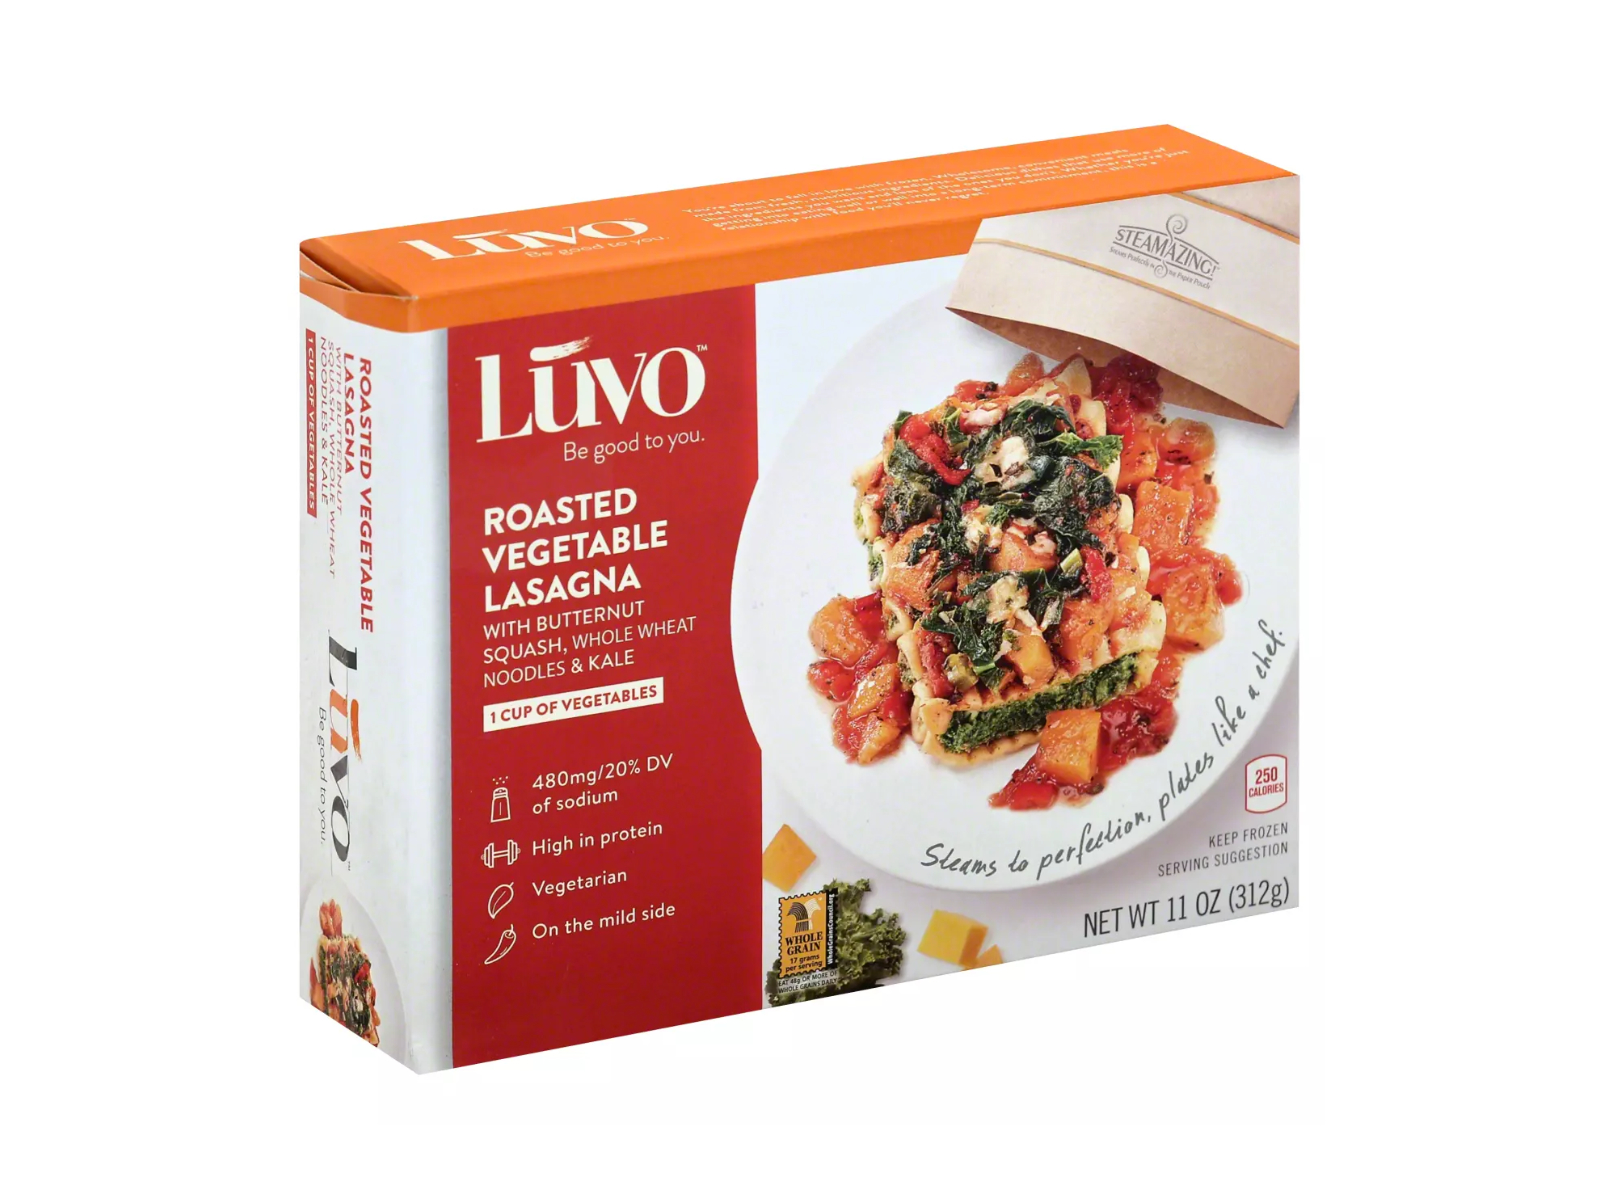 Luvo Roasted Vegetable Lasagna